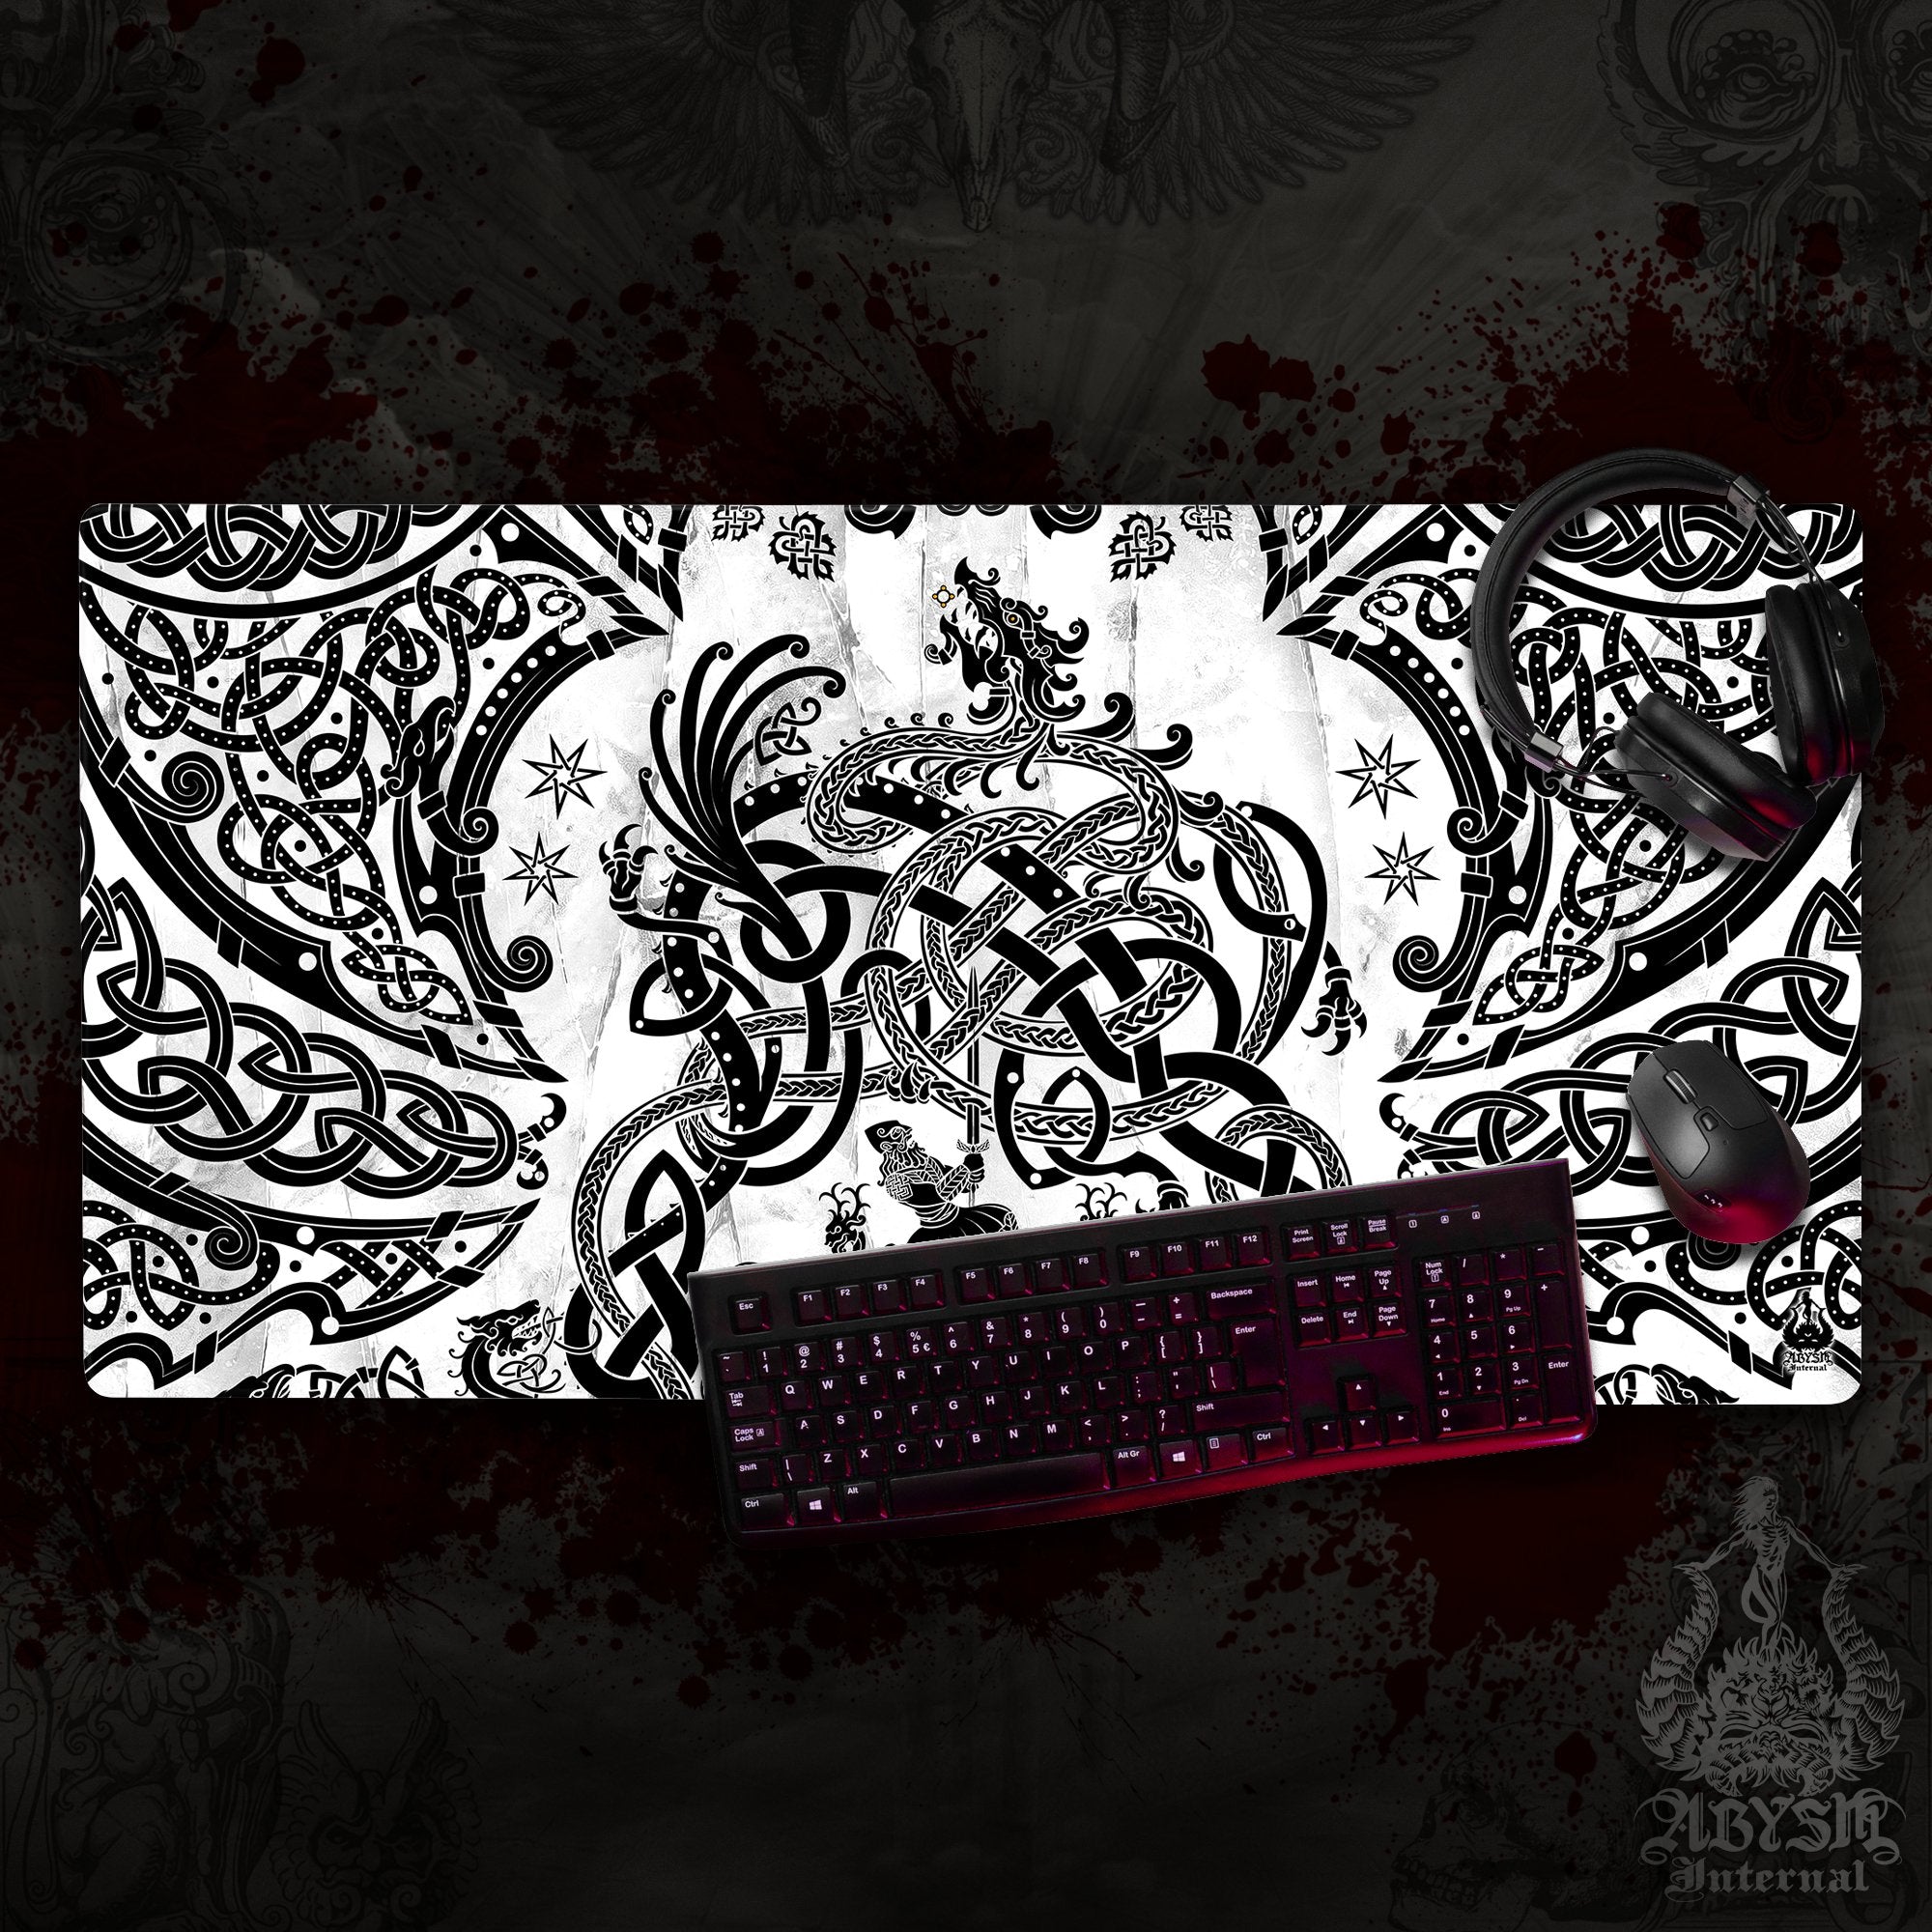 Norse Dragon Gaming Desk Mat, Viking Mouse Pad, Nordic Knotwork Table Protector Cover, Fafnir Workpad, Art Print - Black White - Abysm Internal